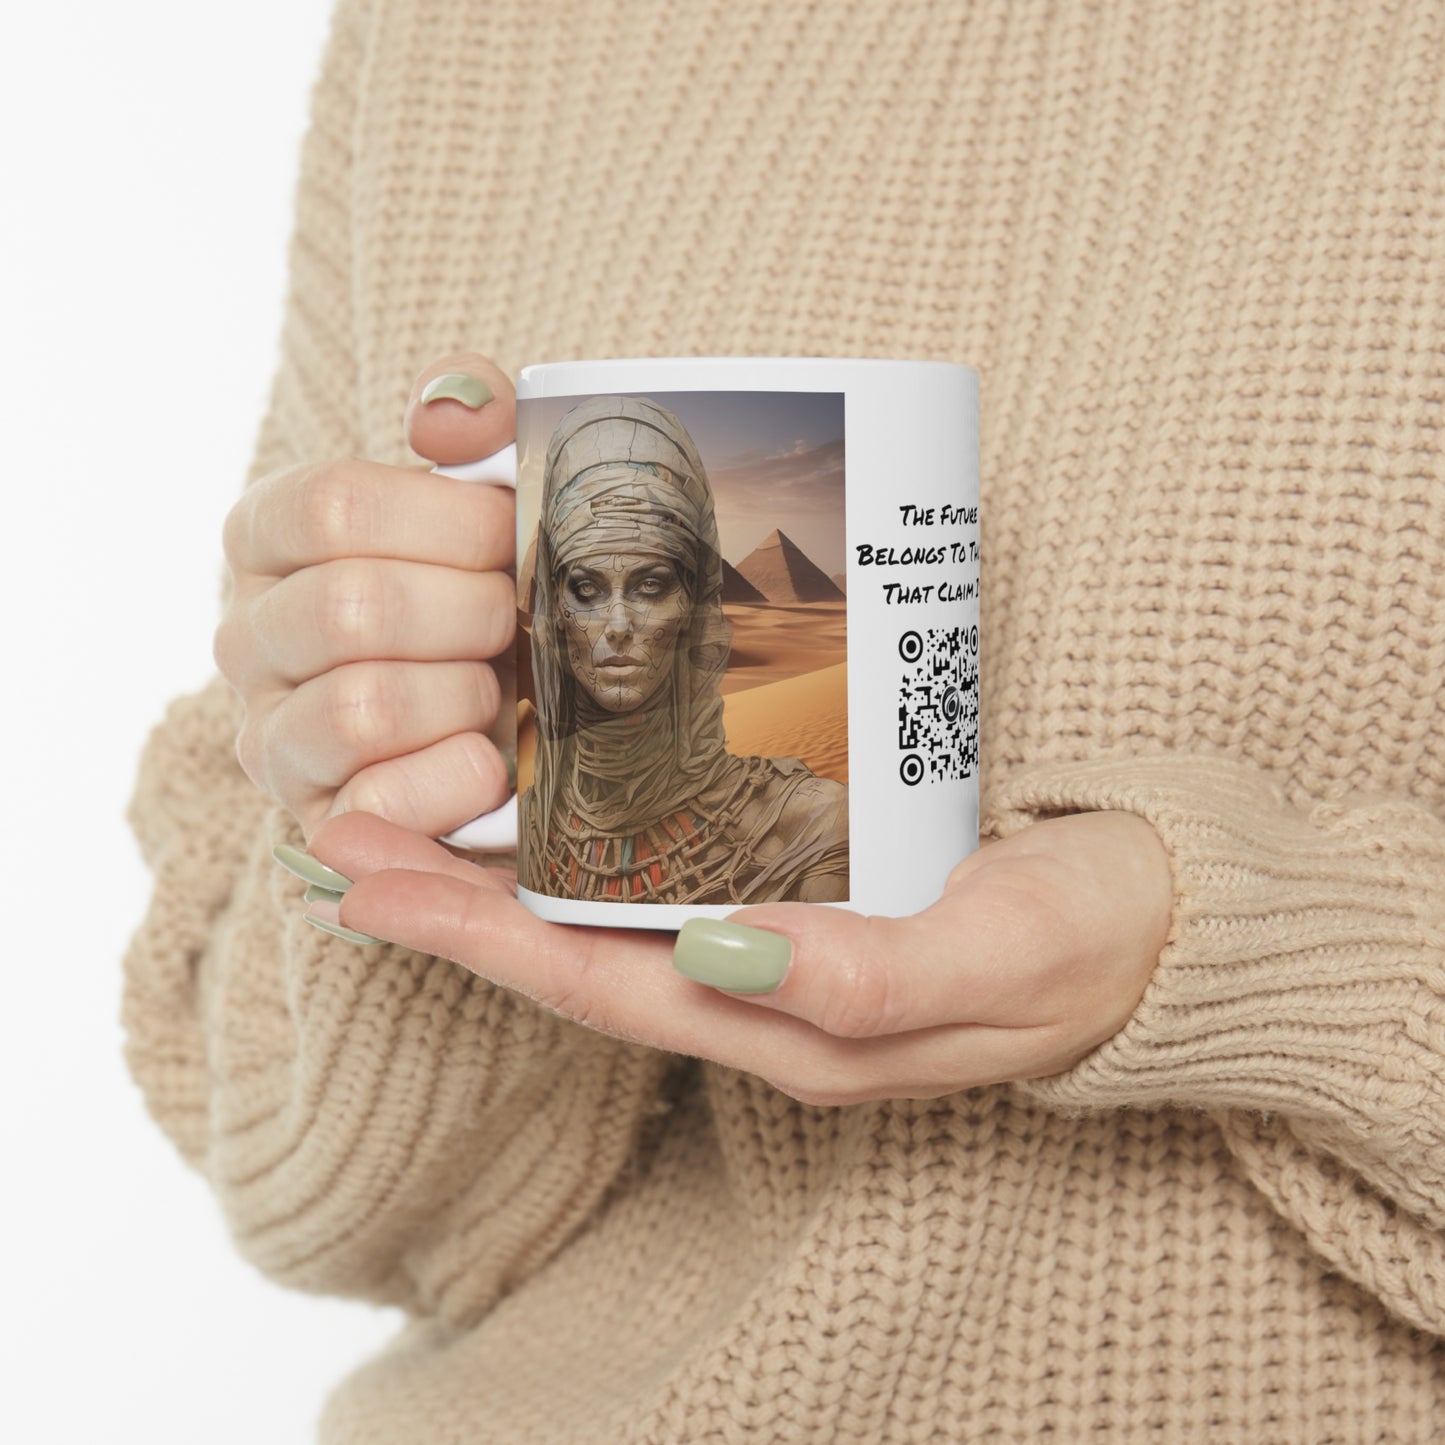 Mummy Dearest | HD Graphic | Egypt | Mythology | Pyramids | Coffee | Tea | Hot Chocolate | 11oz | White Mug